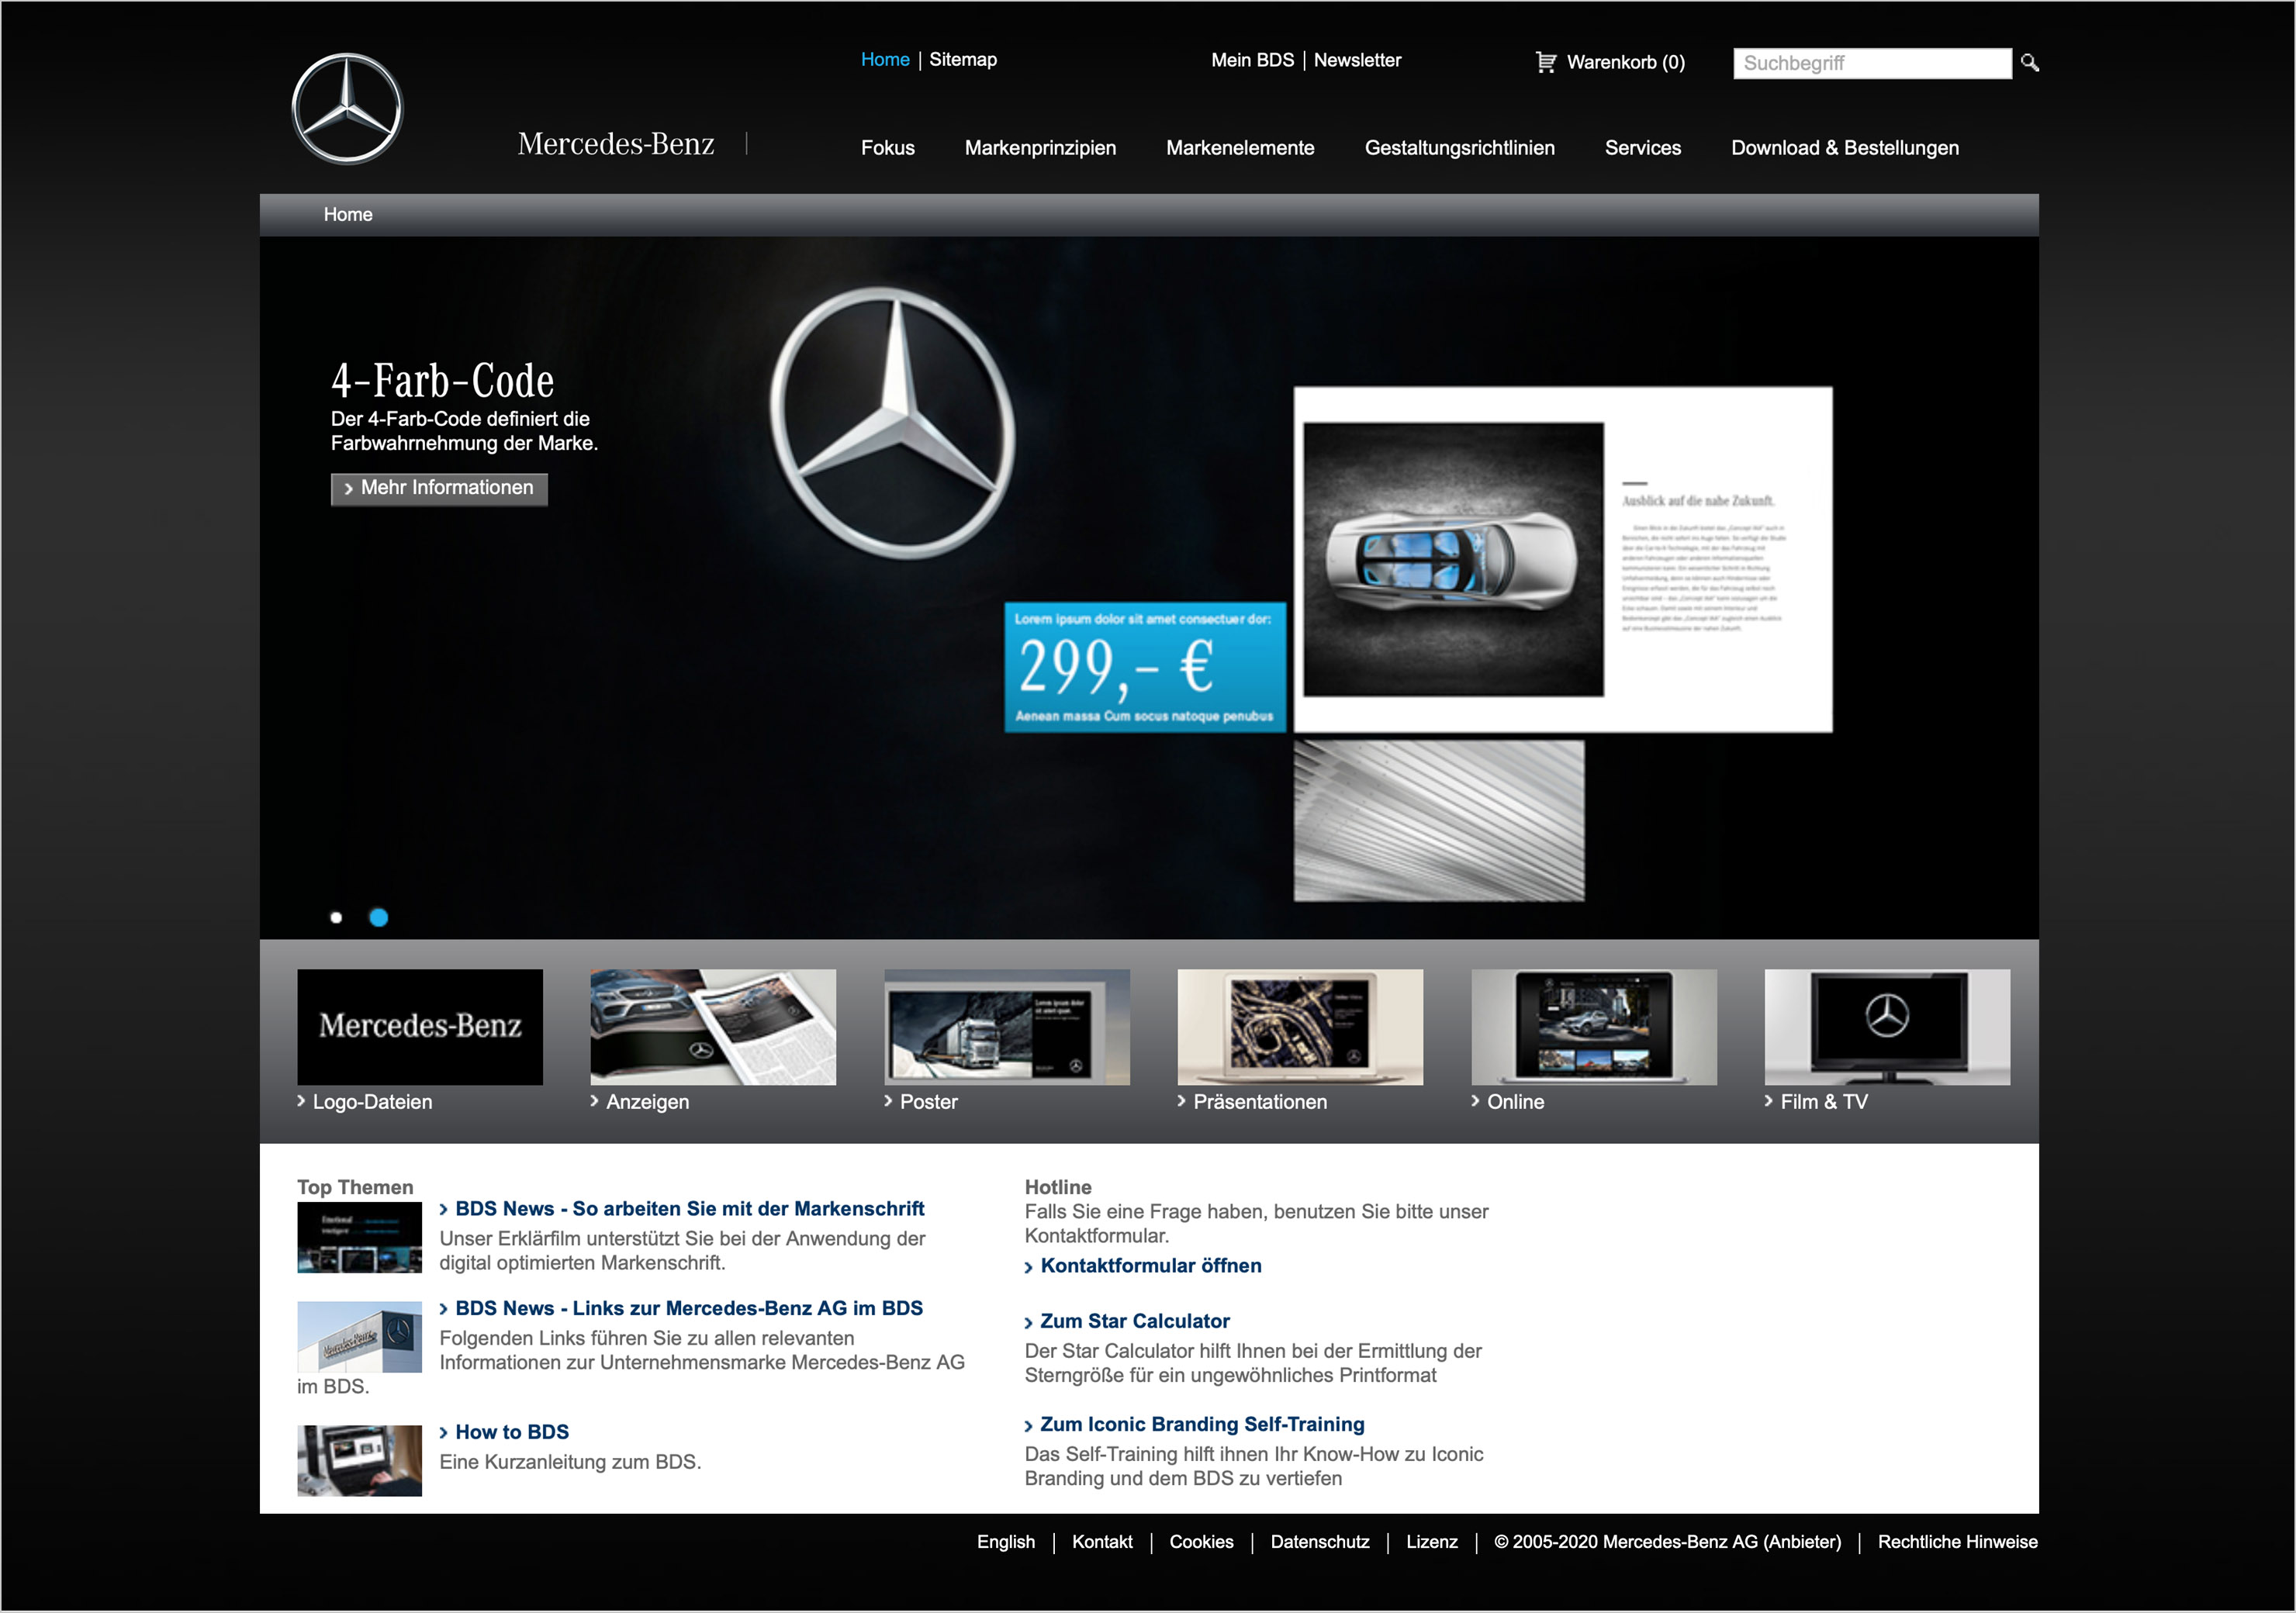 Mercedes-Benz Design Insight: Design Code